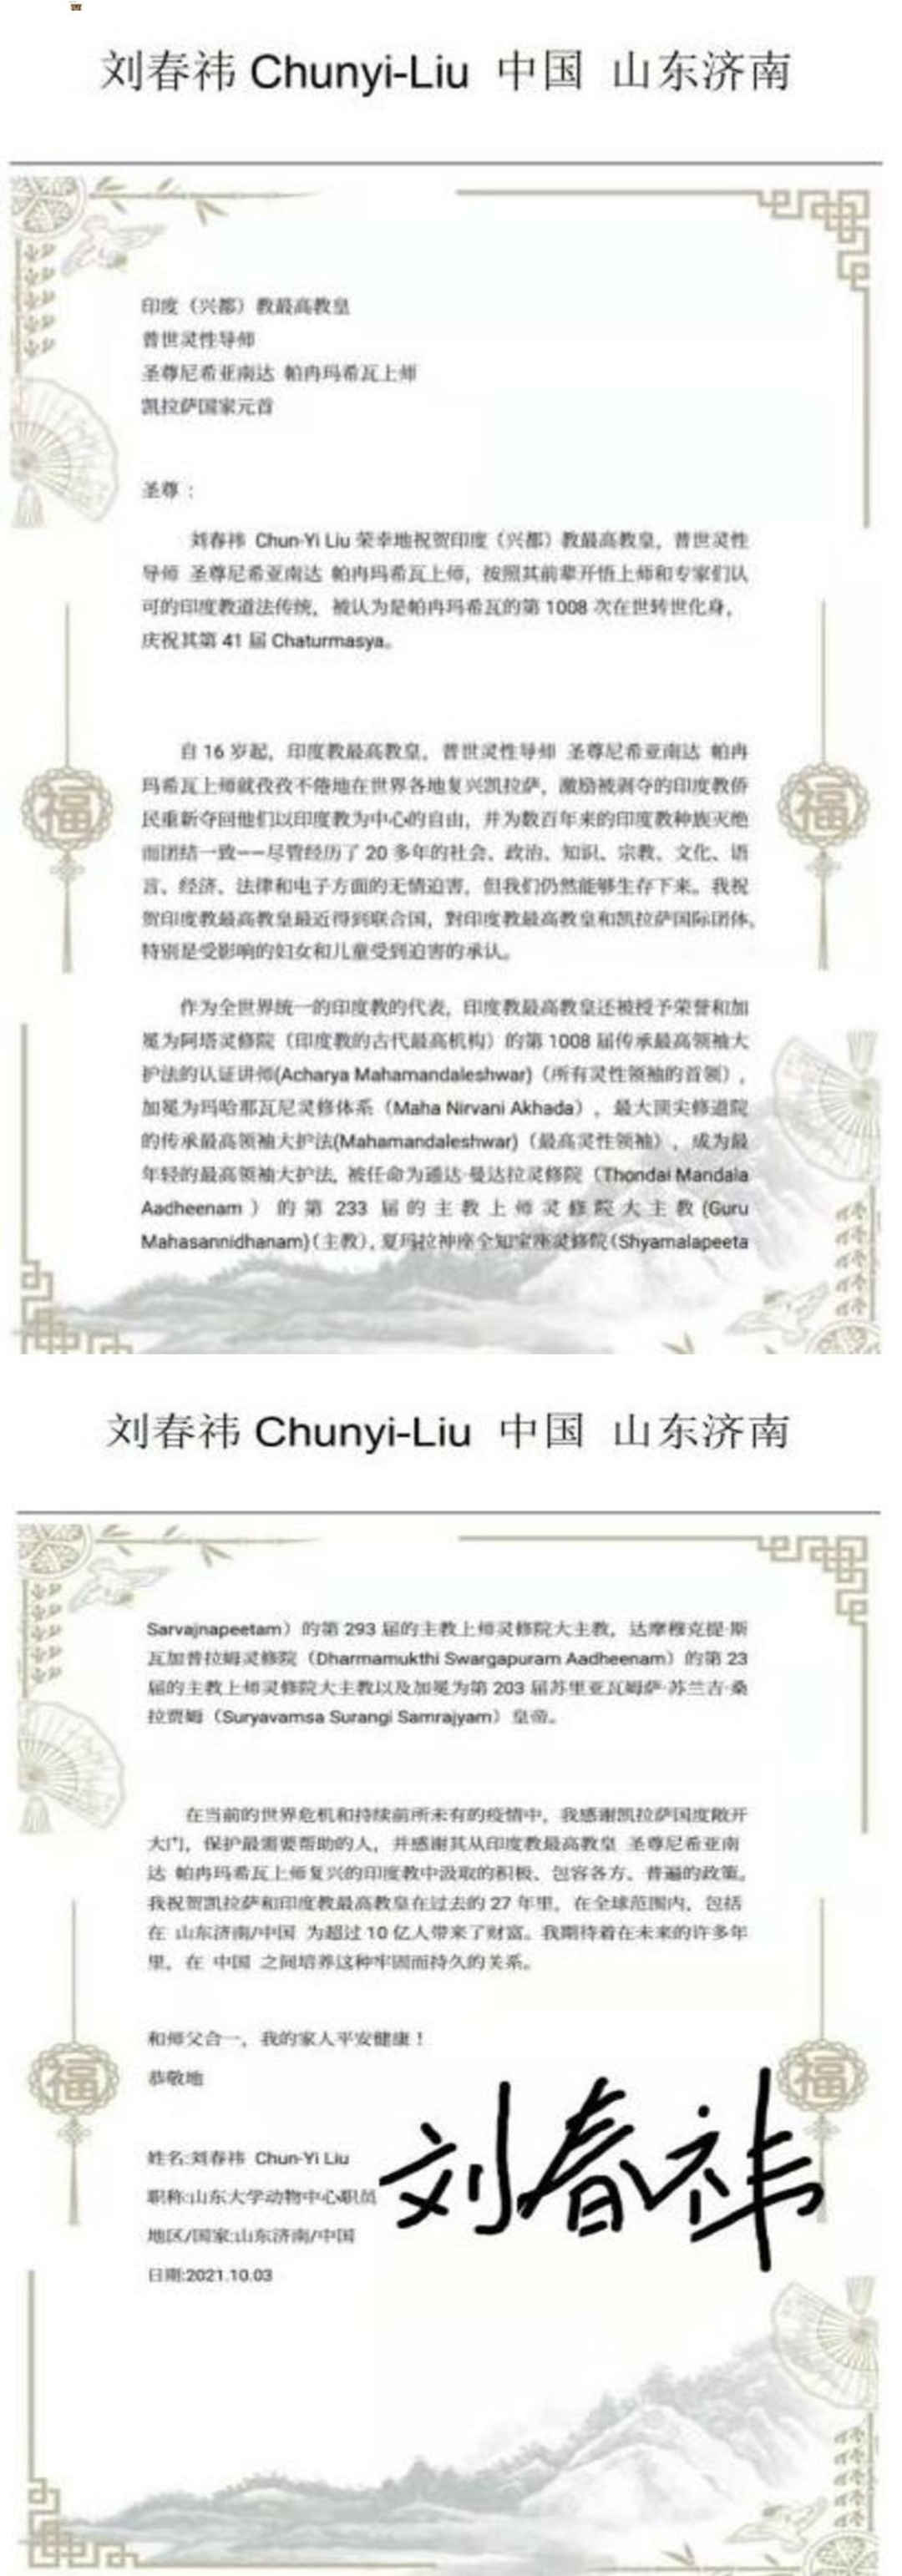 China---Chunyi-Liu---(Proclamation)-11jXU2LzyK2mM1 51NG2vSAAqMdPVNqUS.pdf